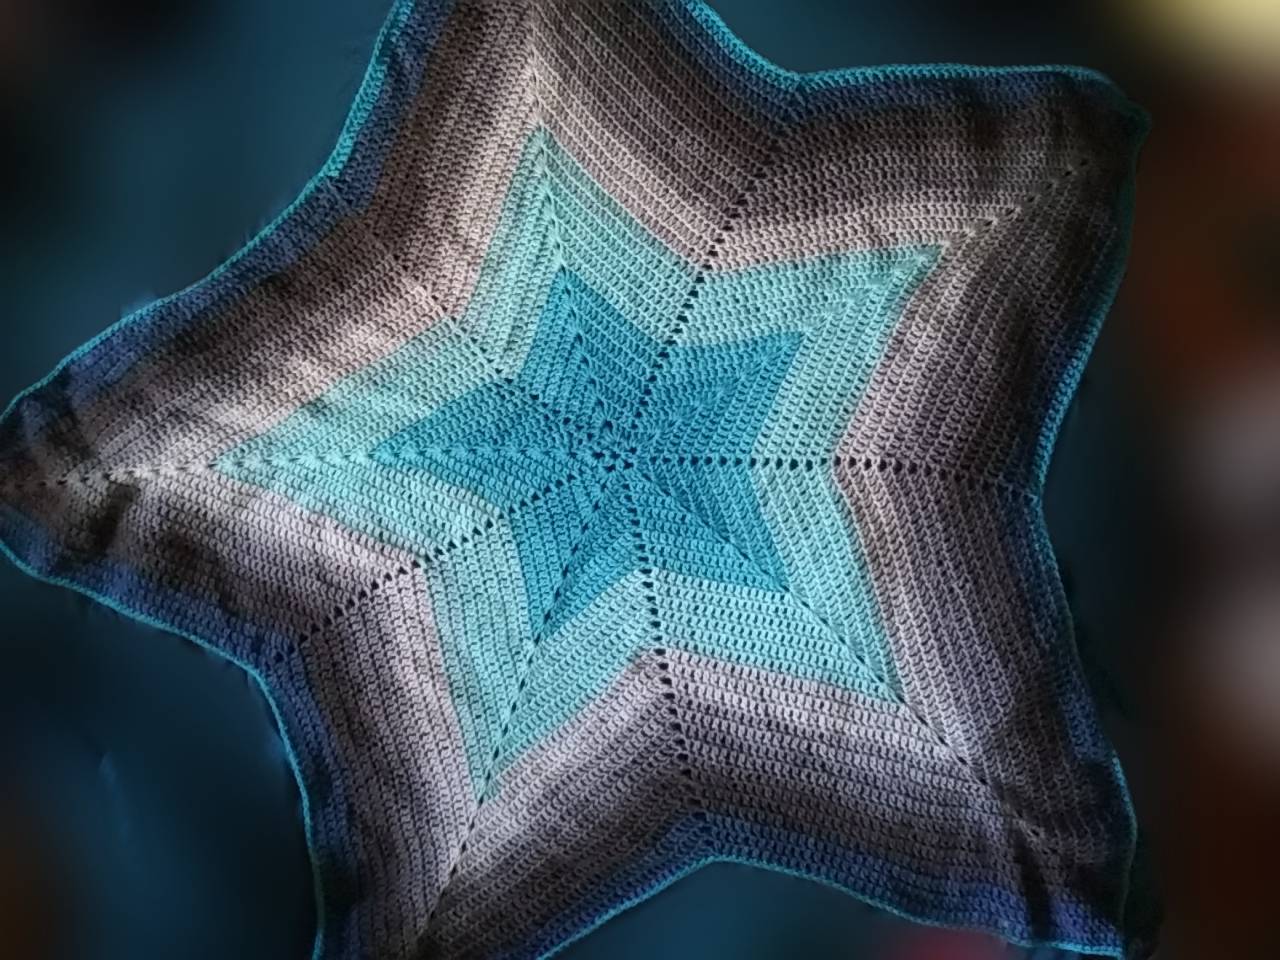 Crochet Star Throw, Soft Blanket in Shades of Blue and Gray, Custom Crochet by Half-Cracked Guru